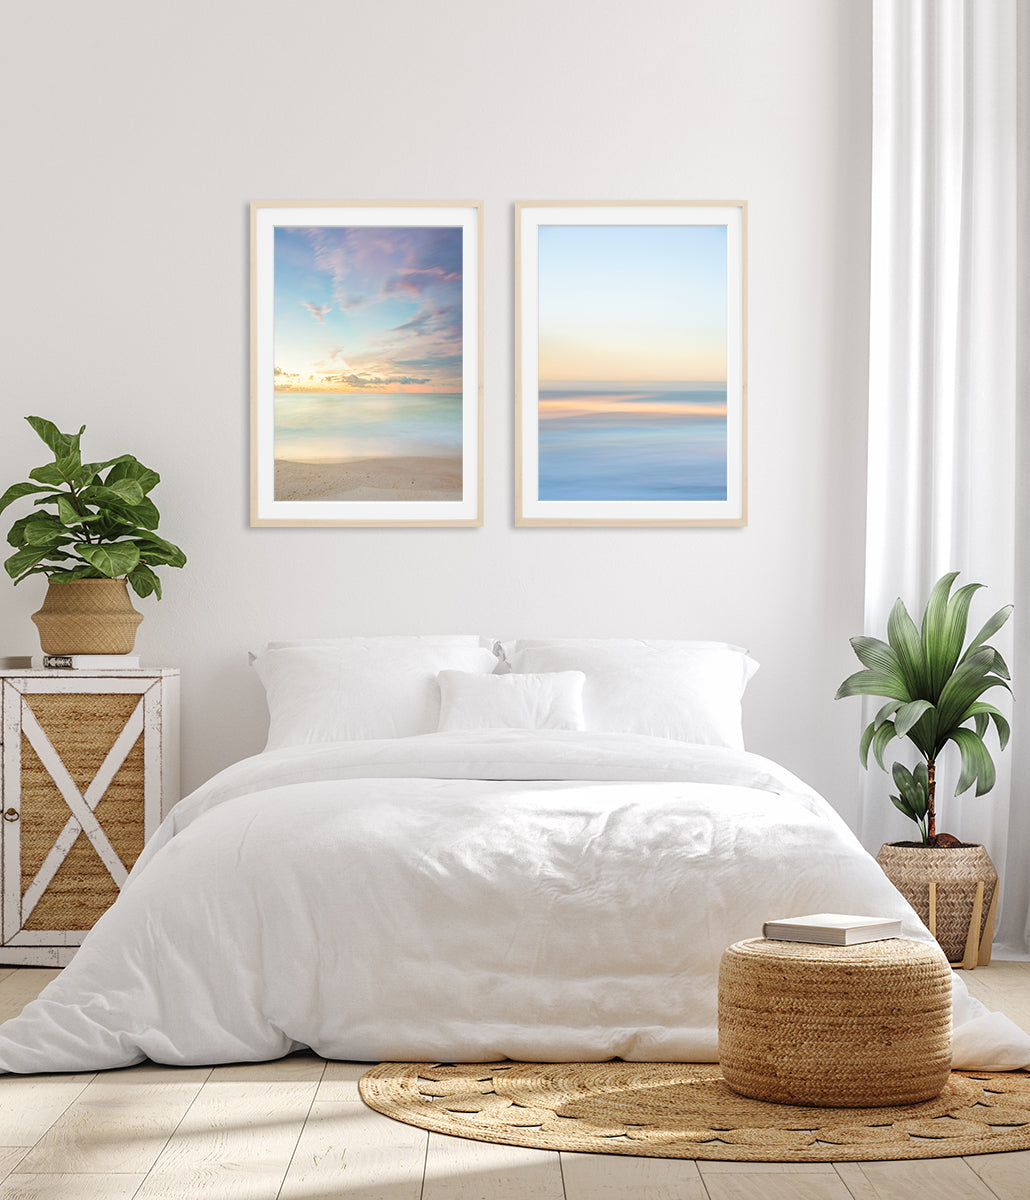 bright white bedroom decor, 2 pastel beach photographs